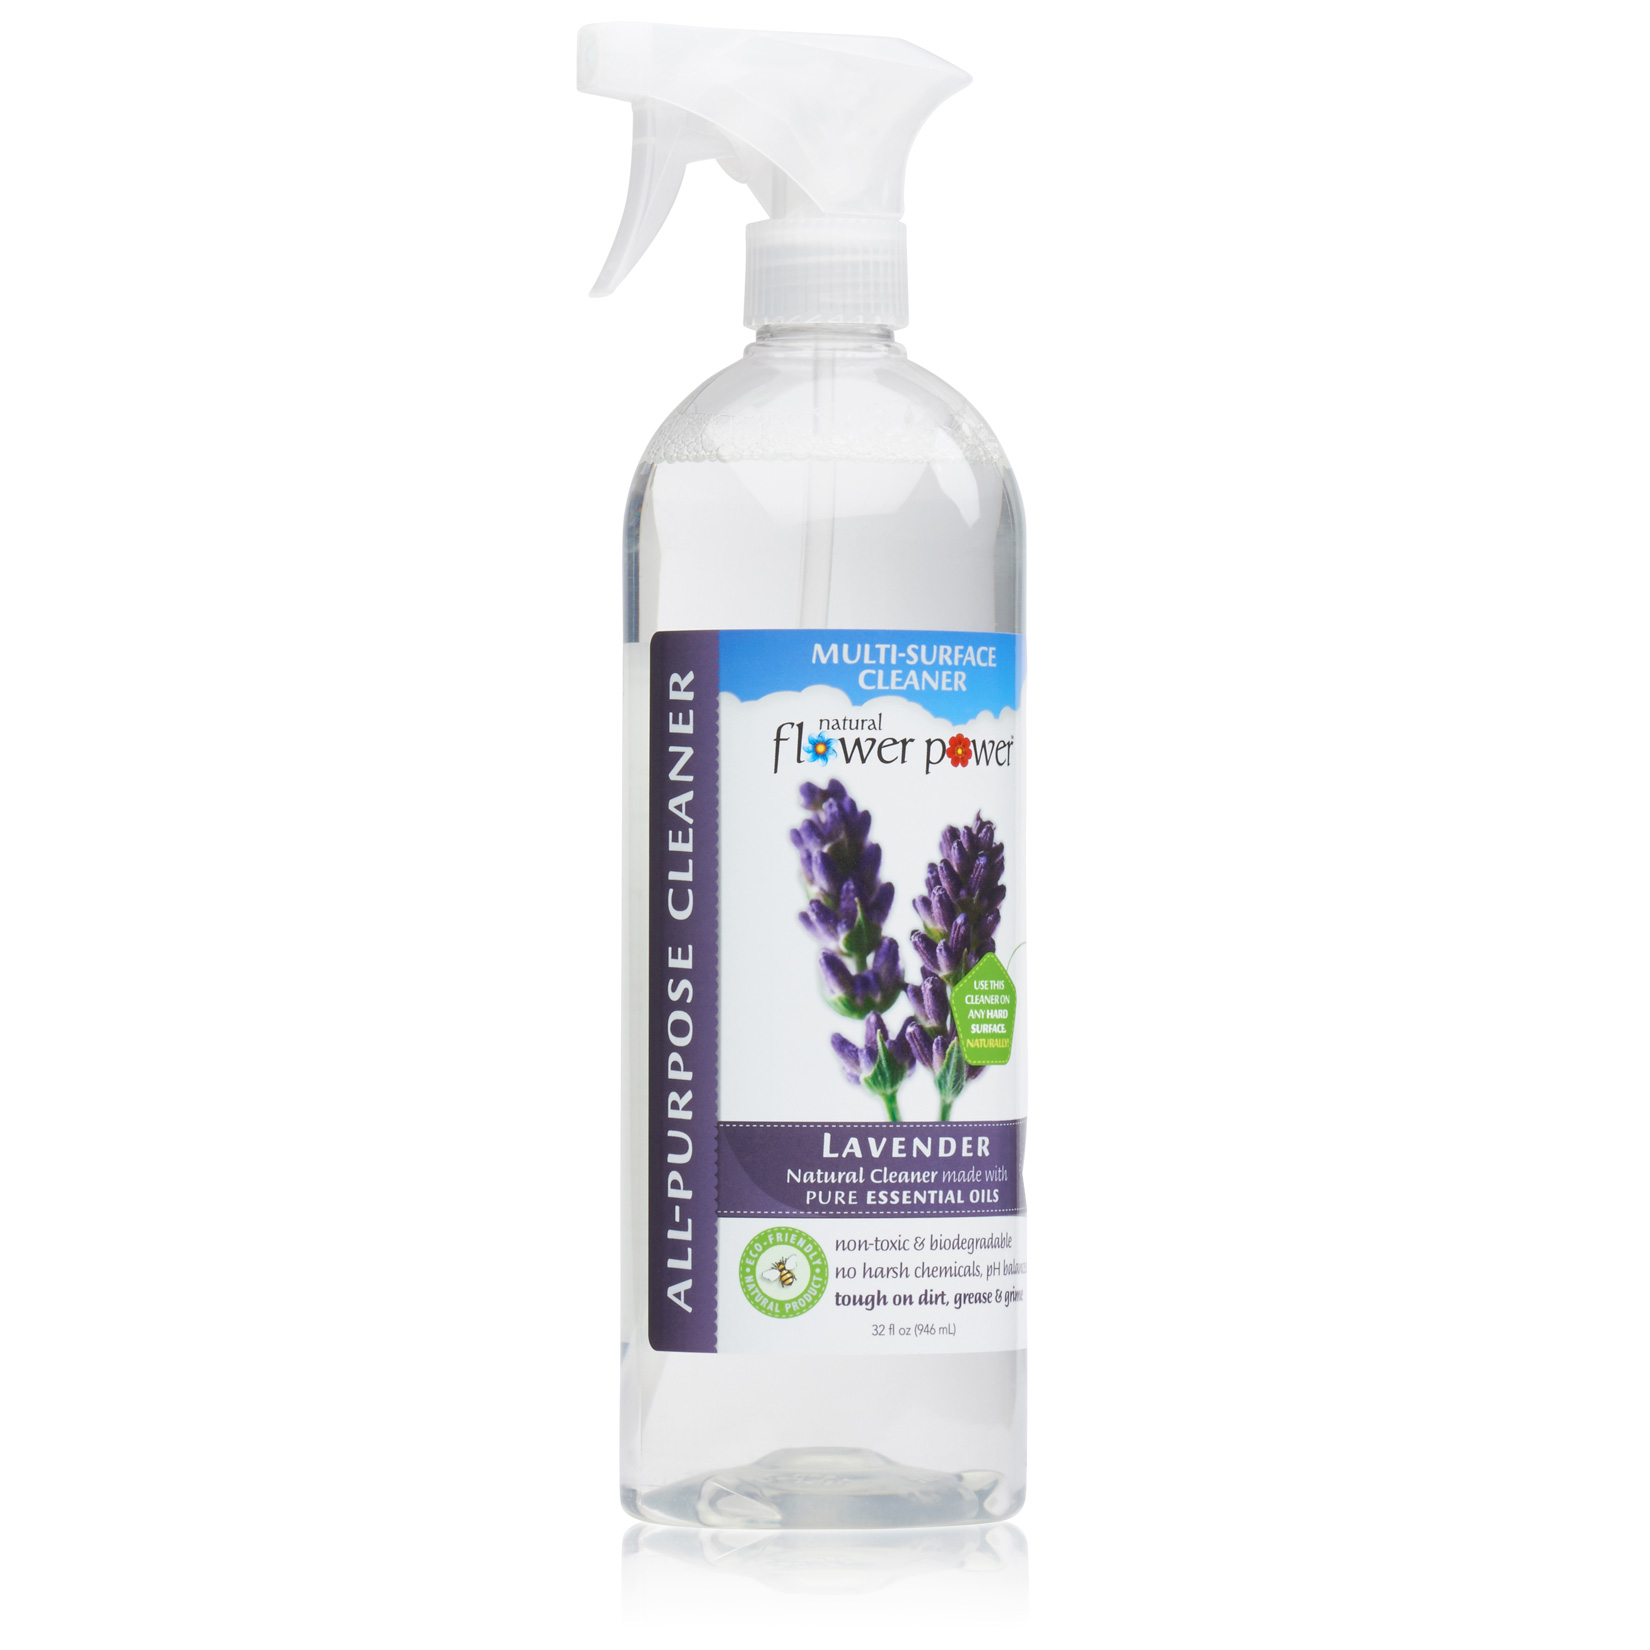 https://naturalflowerpower.com/wp-content/uploads/2013/02/all-purpose-cleaner-lavender-profile-1650x1650.jpg